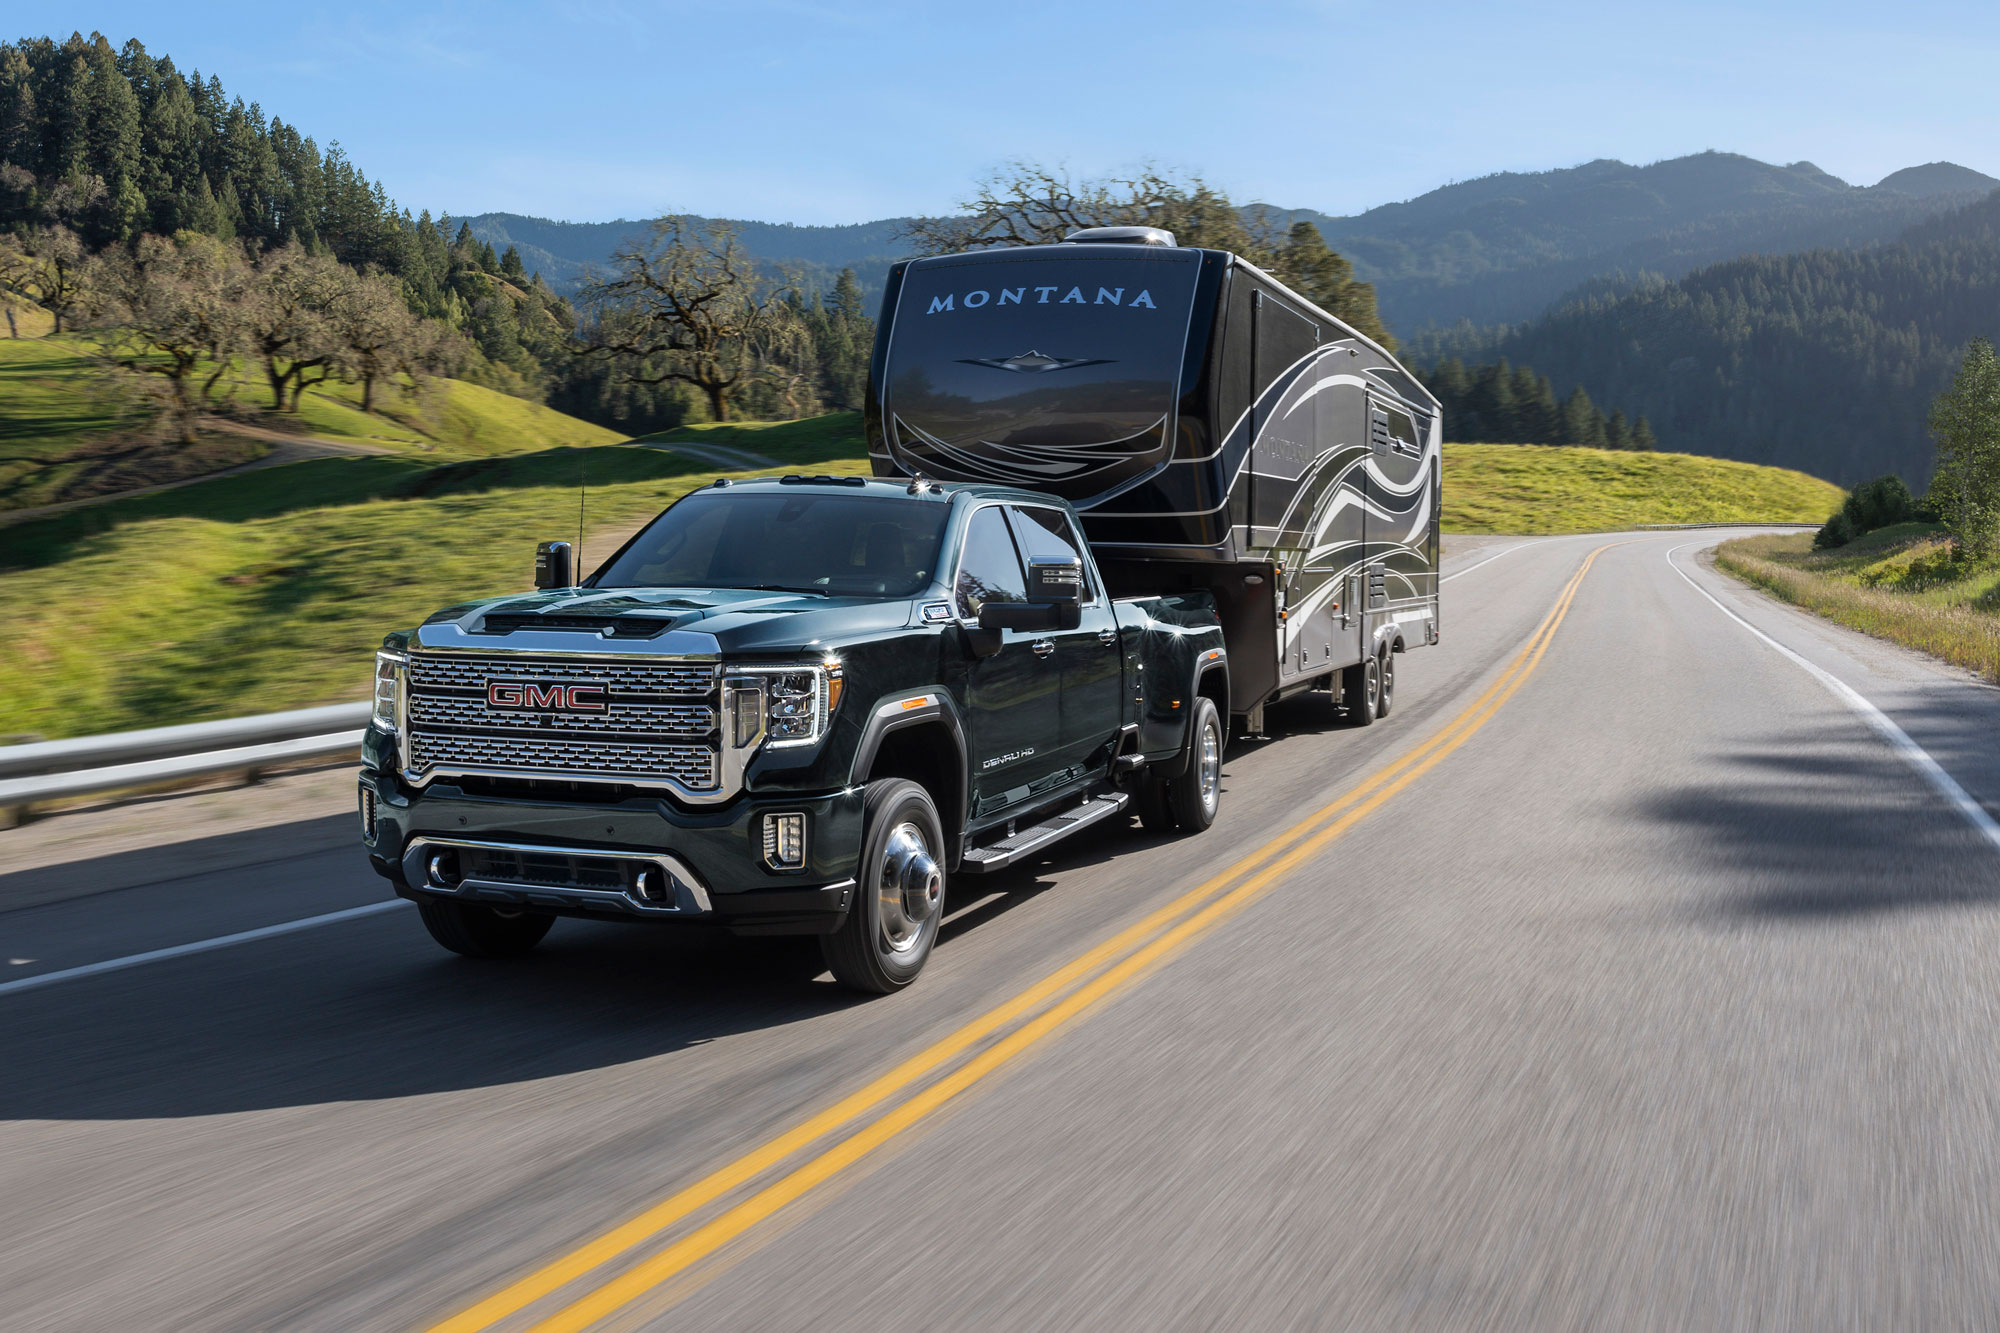 2023 GMC Sierra 3500 tows a travel trailer down a scenic rural highway.